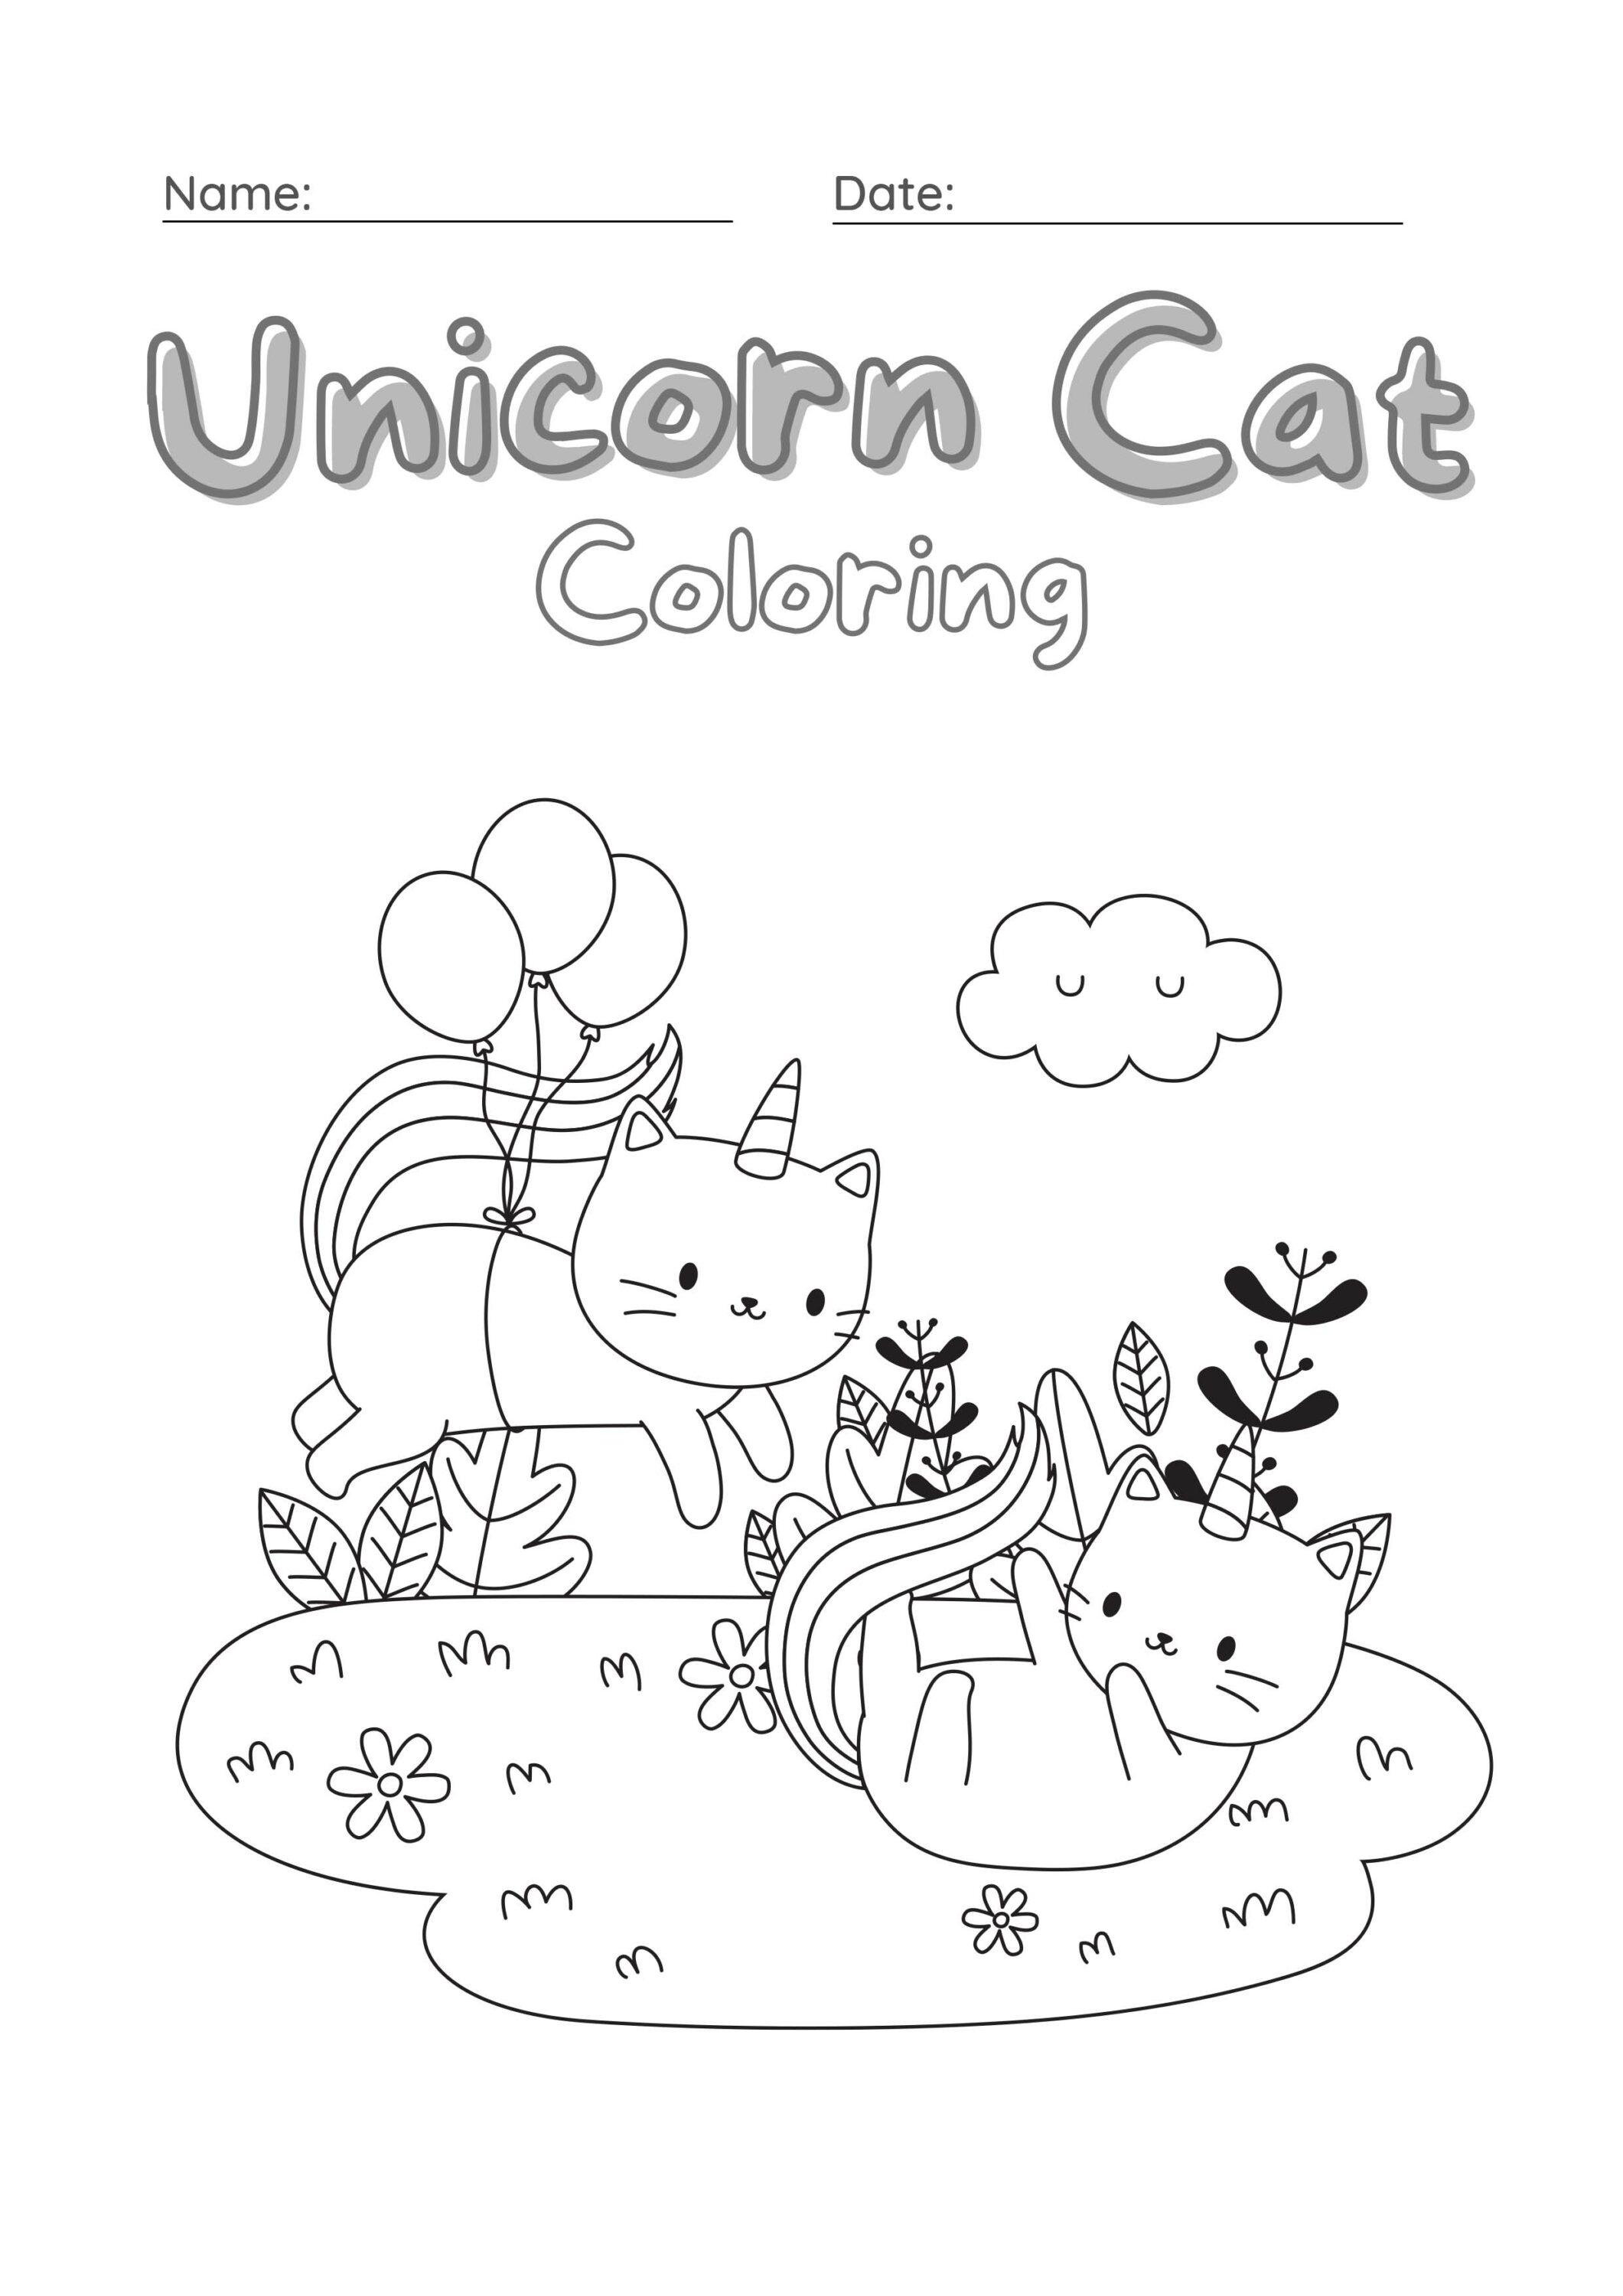 Unicorn Cat Coloring Worksheet Set 12